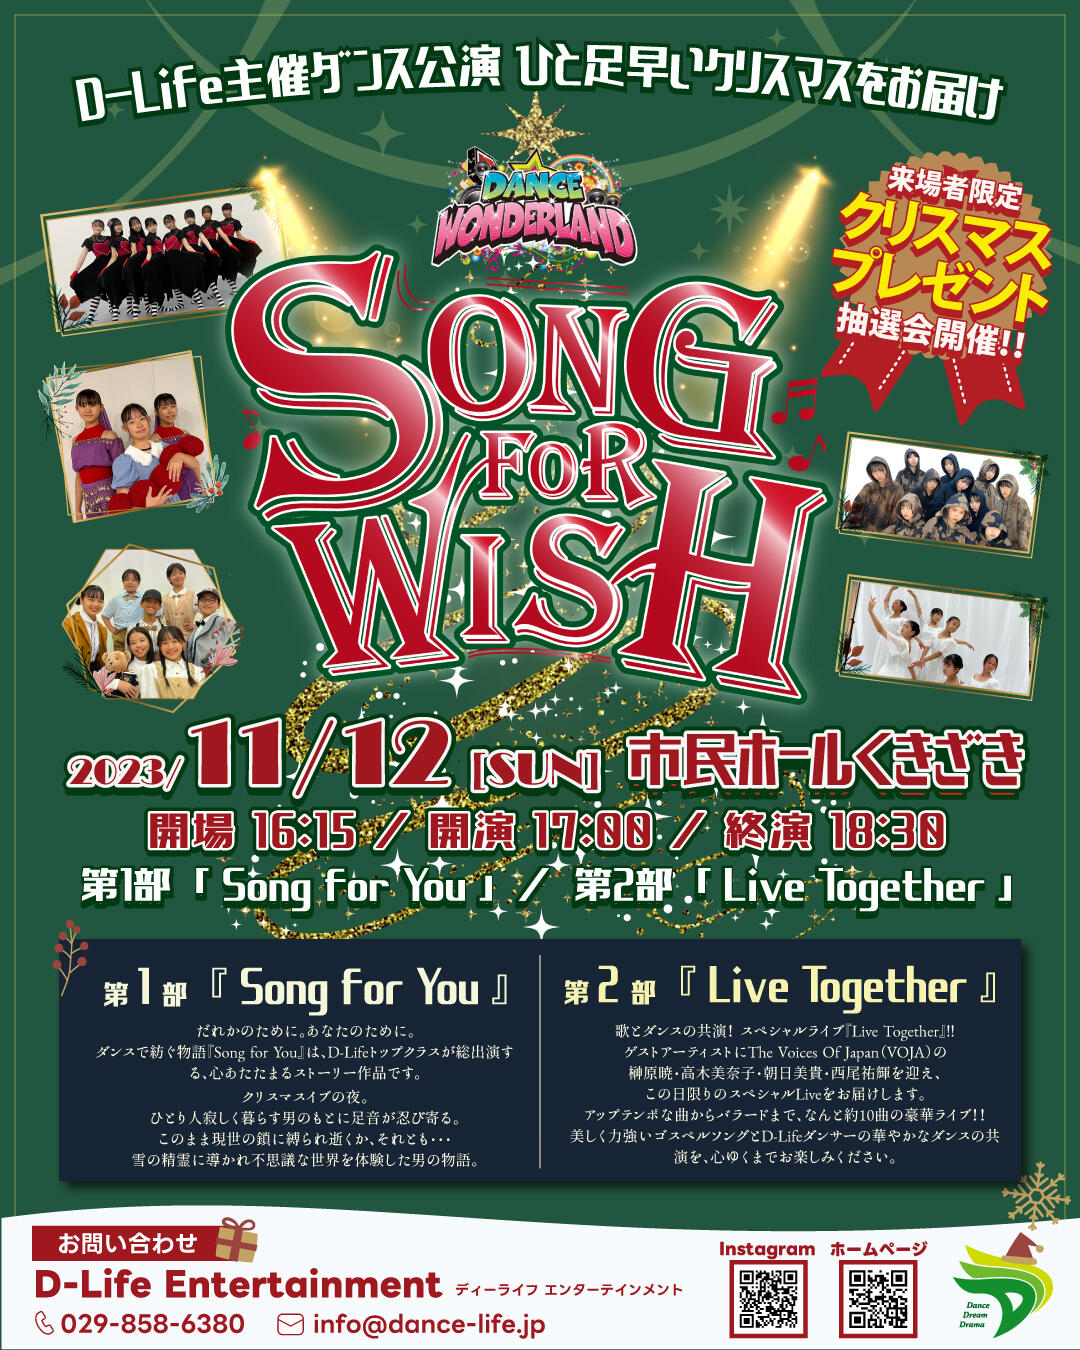 【11/12】 Dance Wonderland「Song for Wish」：当日券販売情報・WEBパンフレット掲載ページ・皆様へのお願い